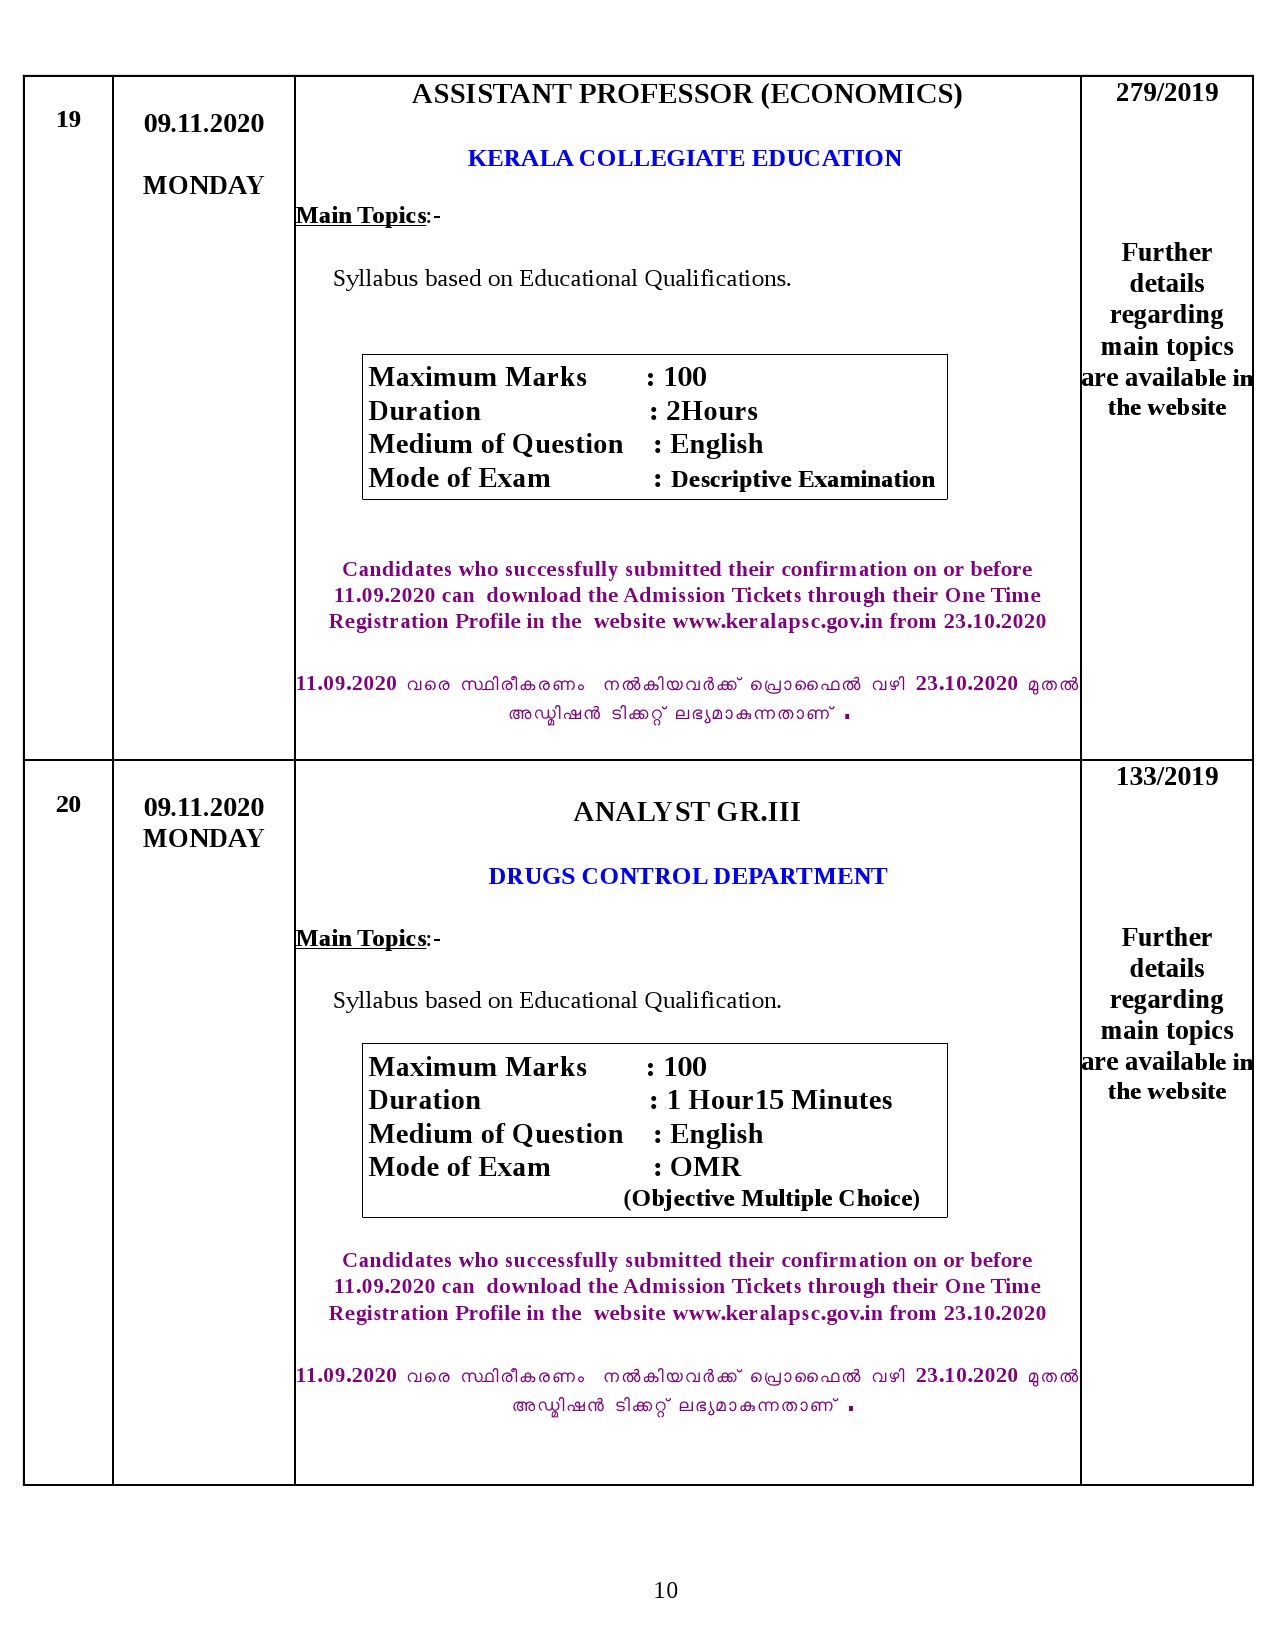 Kerala PSC Final Exam Schedule for November 2020 - Notification Image 10